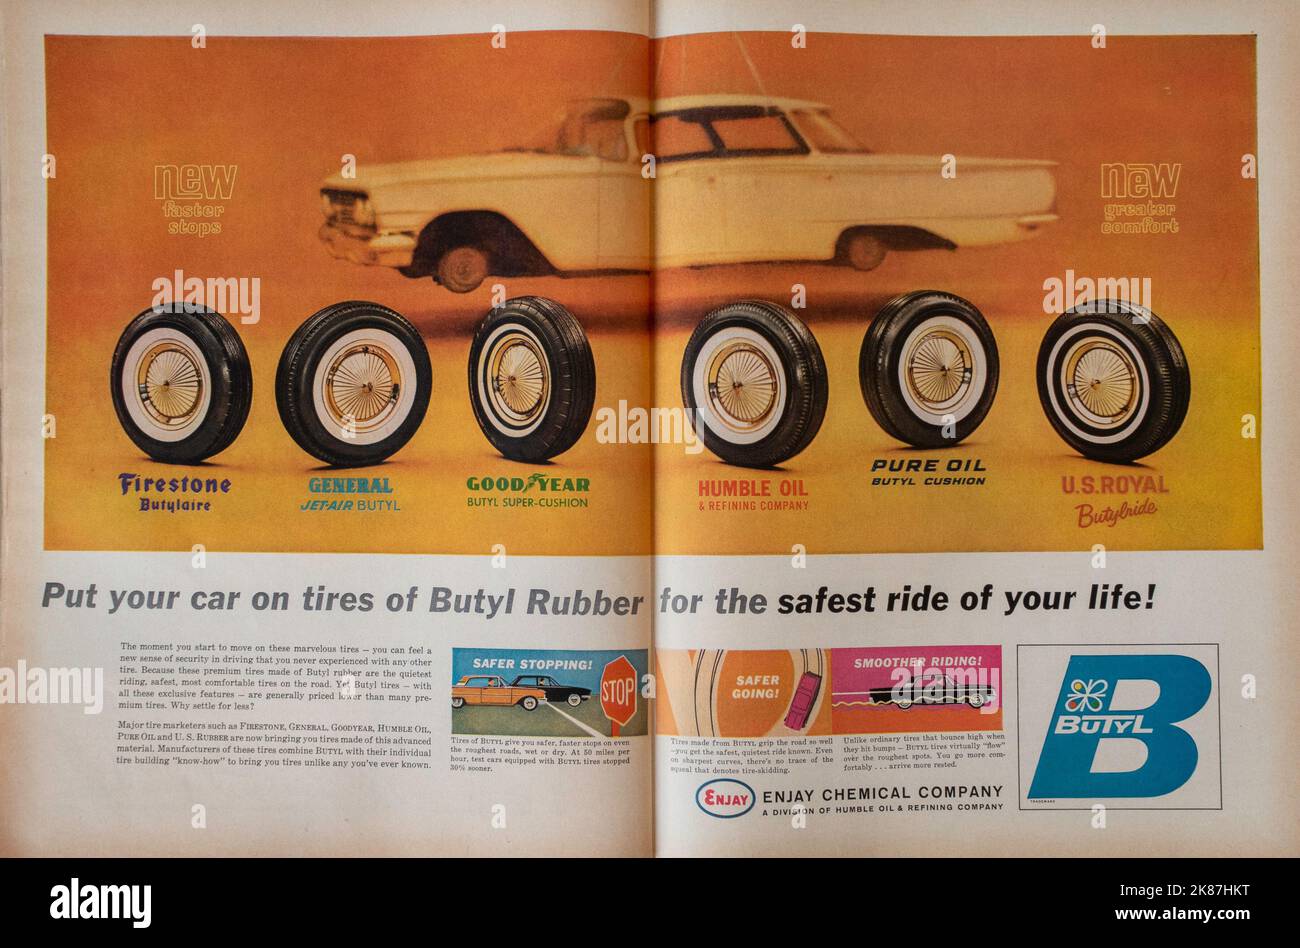 https://c8.alamy.com/comp/2K87HKT/vintage-20-october-1961-life-magazine-advert-usa-2K87HKT.jpg